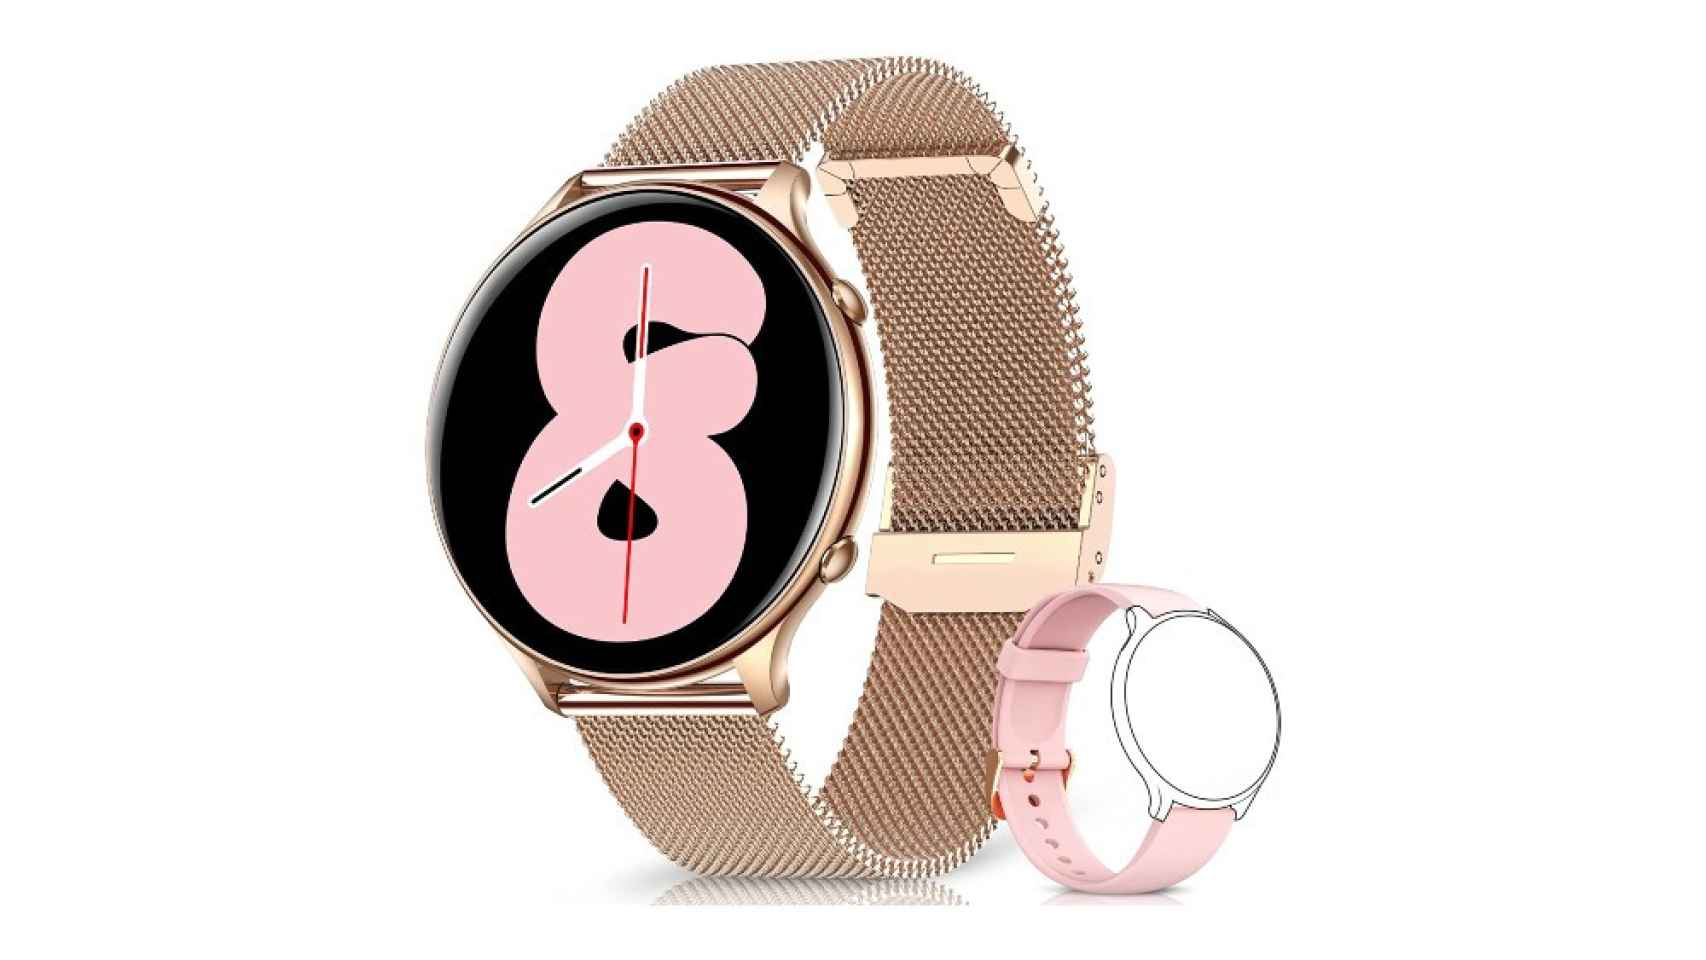 Oferta NAIXUES Smartwatch Mujer, Reloj Inteligente Mujer IP67